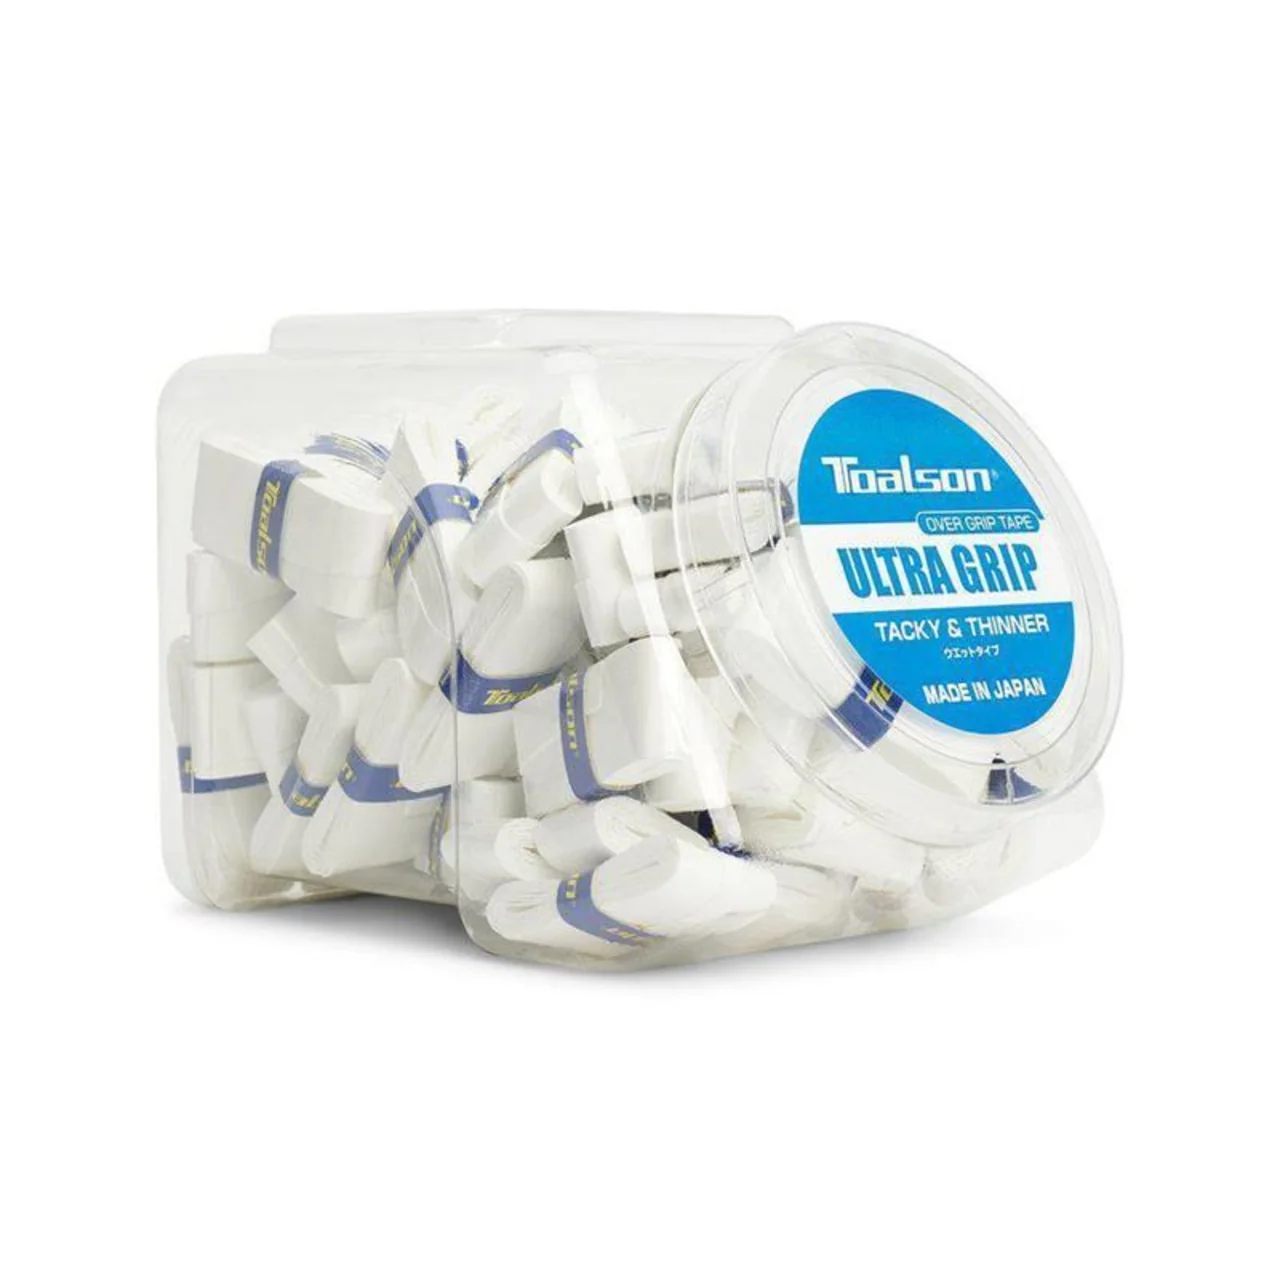 Toalson Ultra Grip 72 Box White